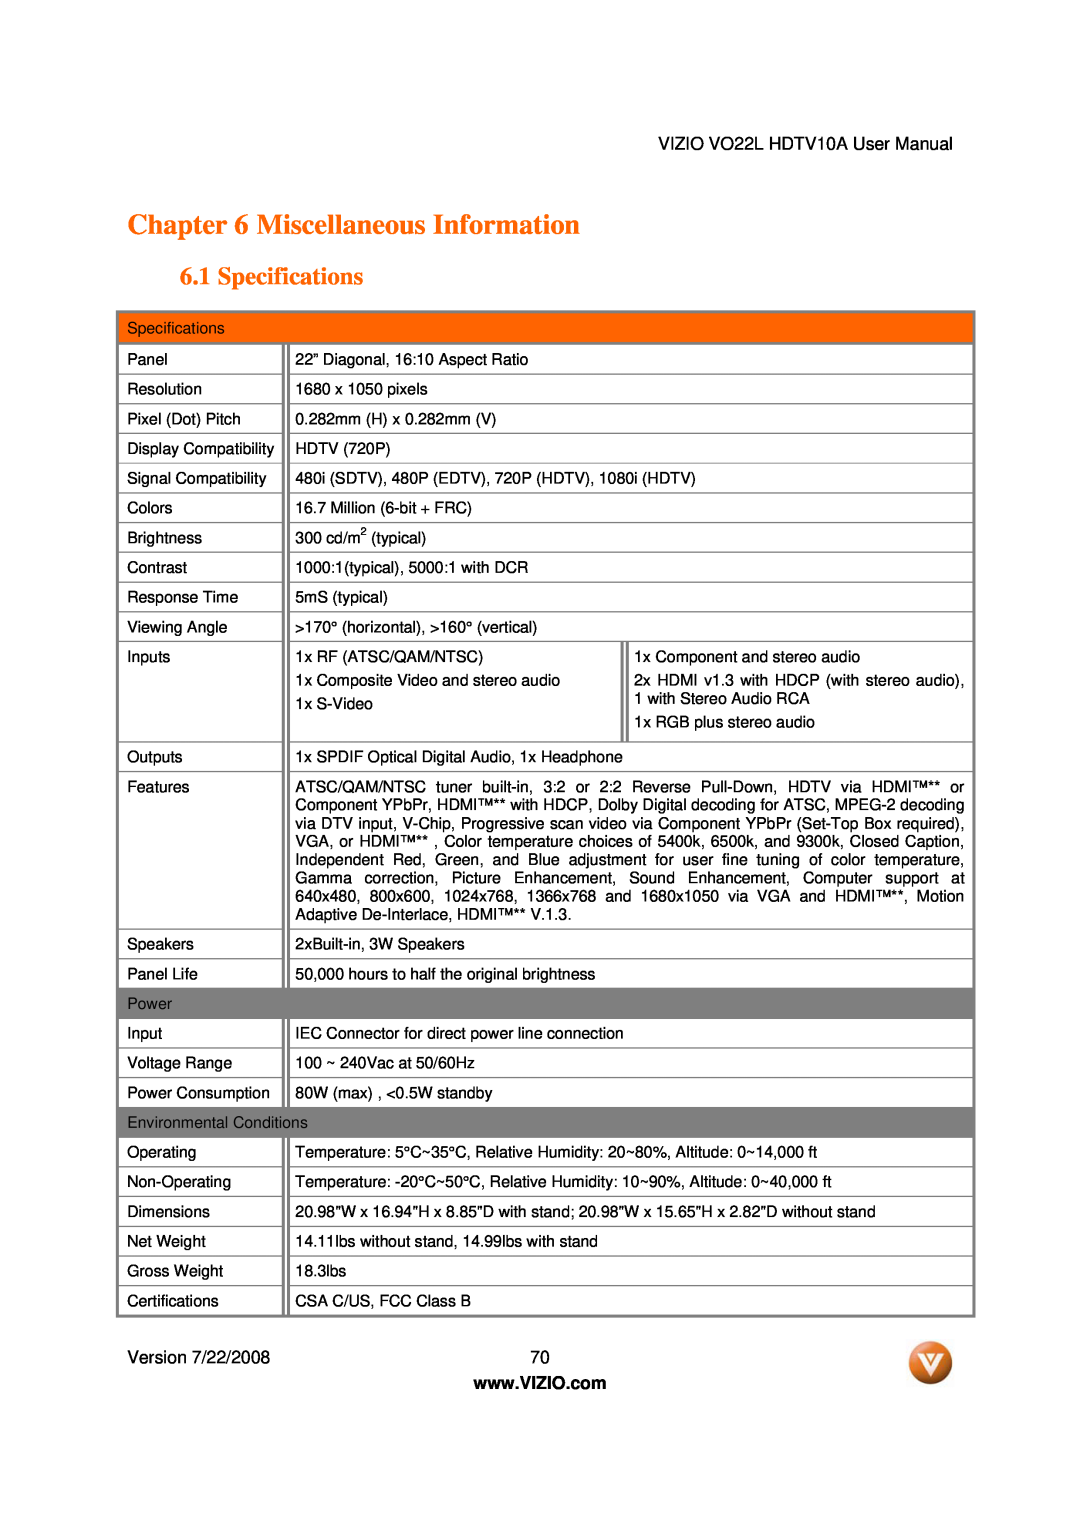 Vizio VO22L user manual Miscellaneous Information, Specifications 